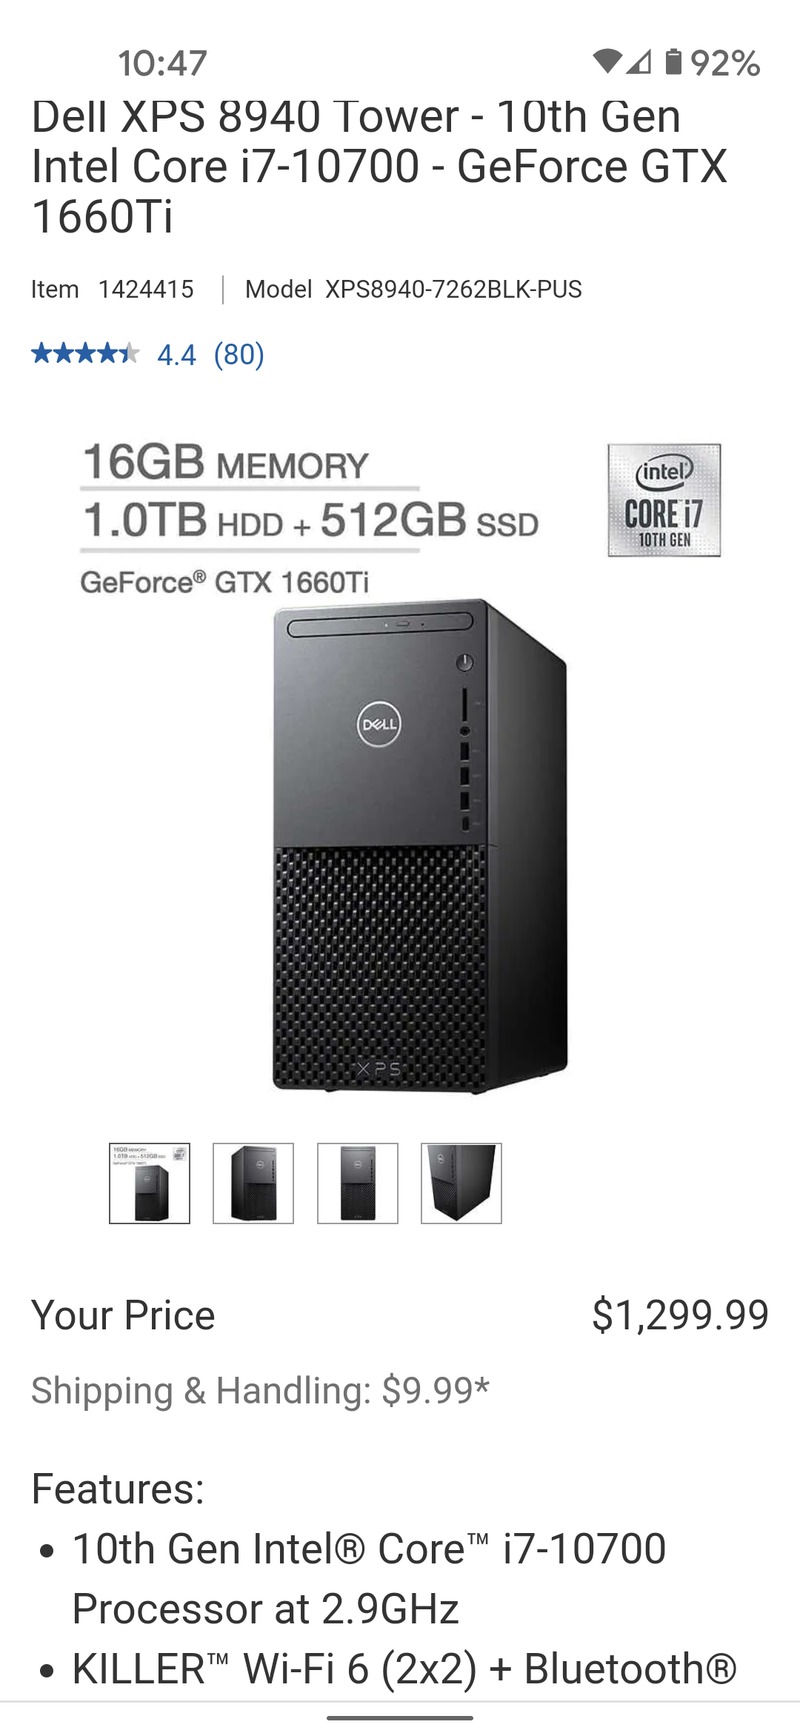 Dell XPS 8940?? Tower, i7-10700, GeForce GTX 1660Ti, 32GB ram, 1.0TB HDD, 512GB SSD. $1299.99.